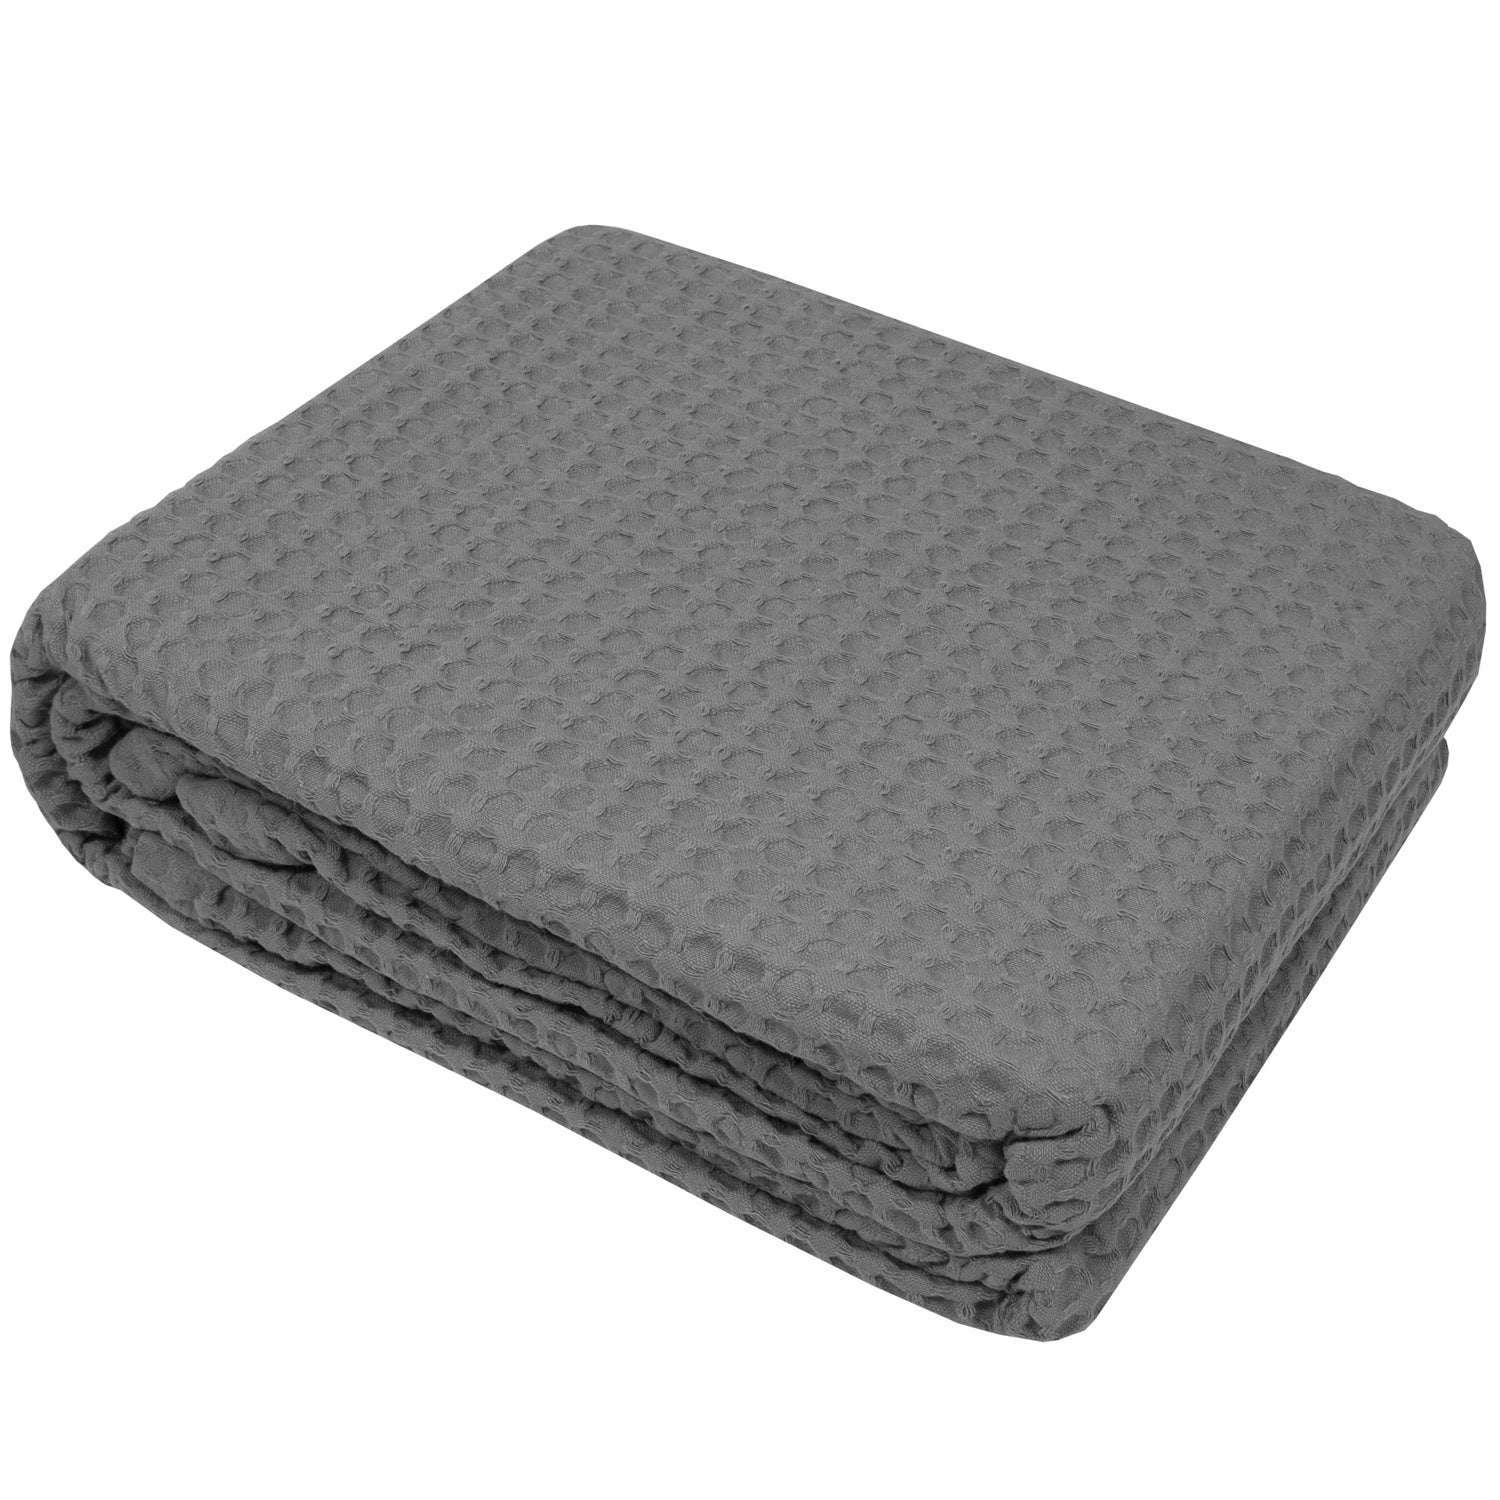 Waffle Weave Cotton Blanket Gray - Folded